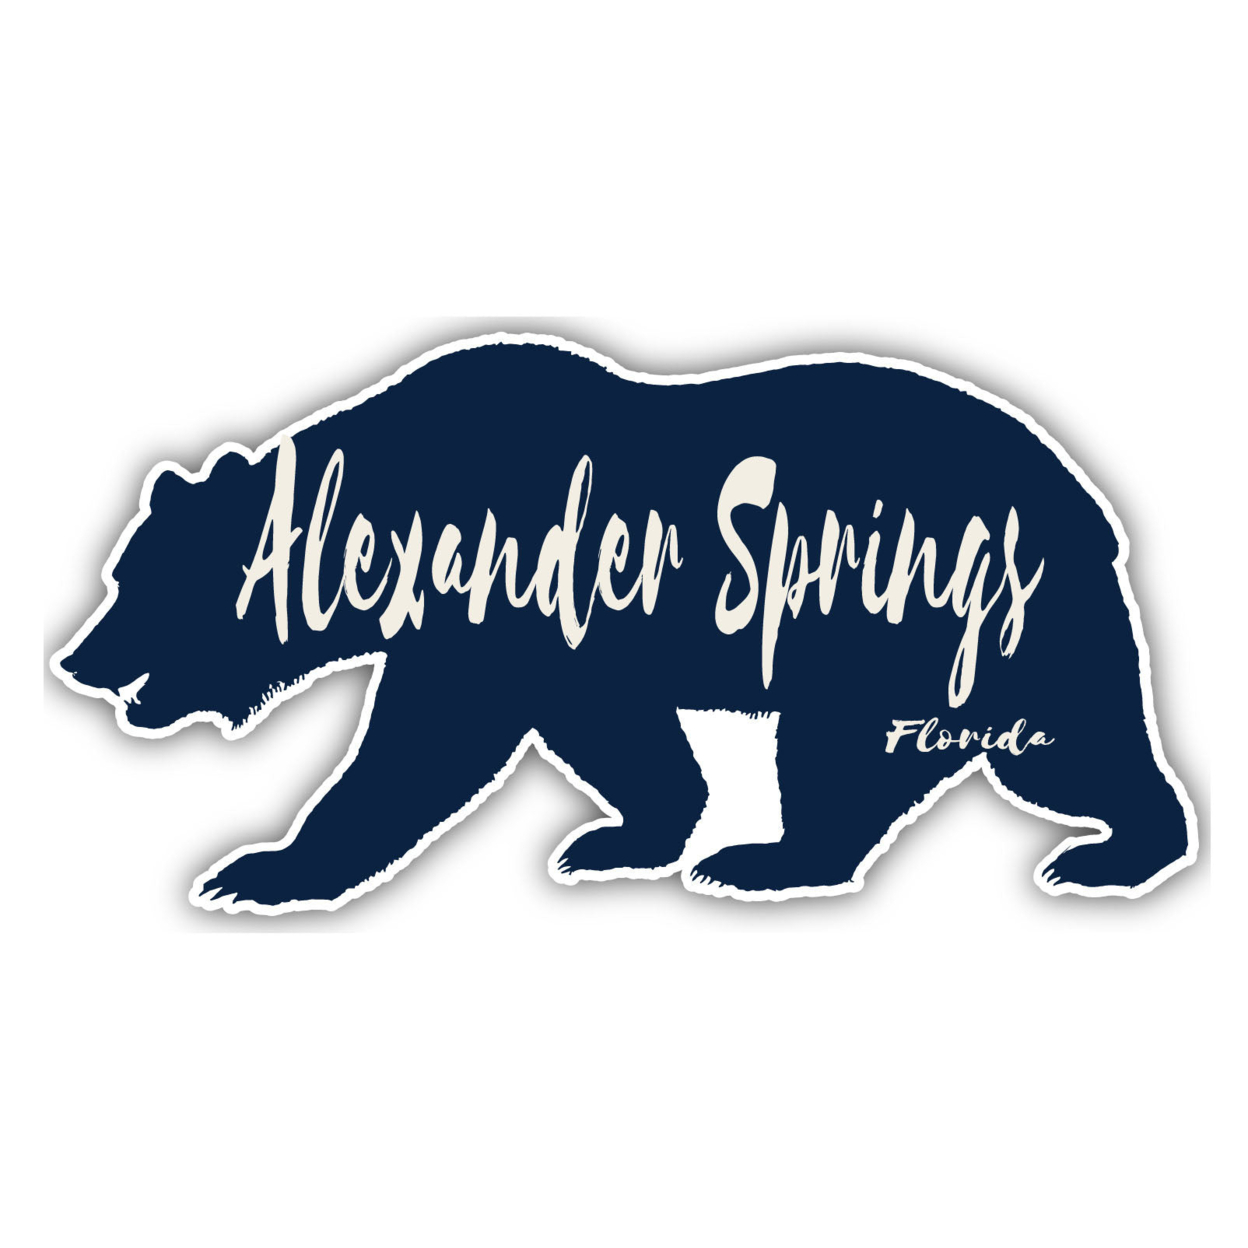 Alexander Springs Florida Souvenir Decorative Stickers (Choose Theme And Size) - Single Unit, 8-Inch, Bear